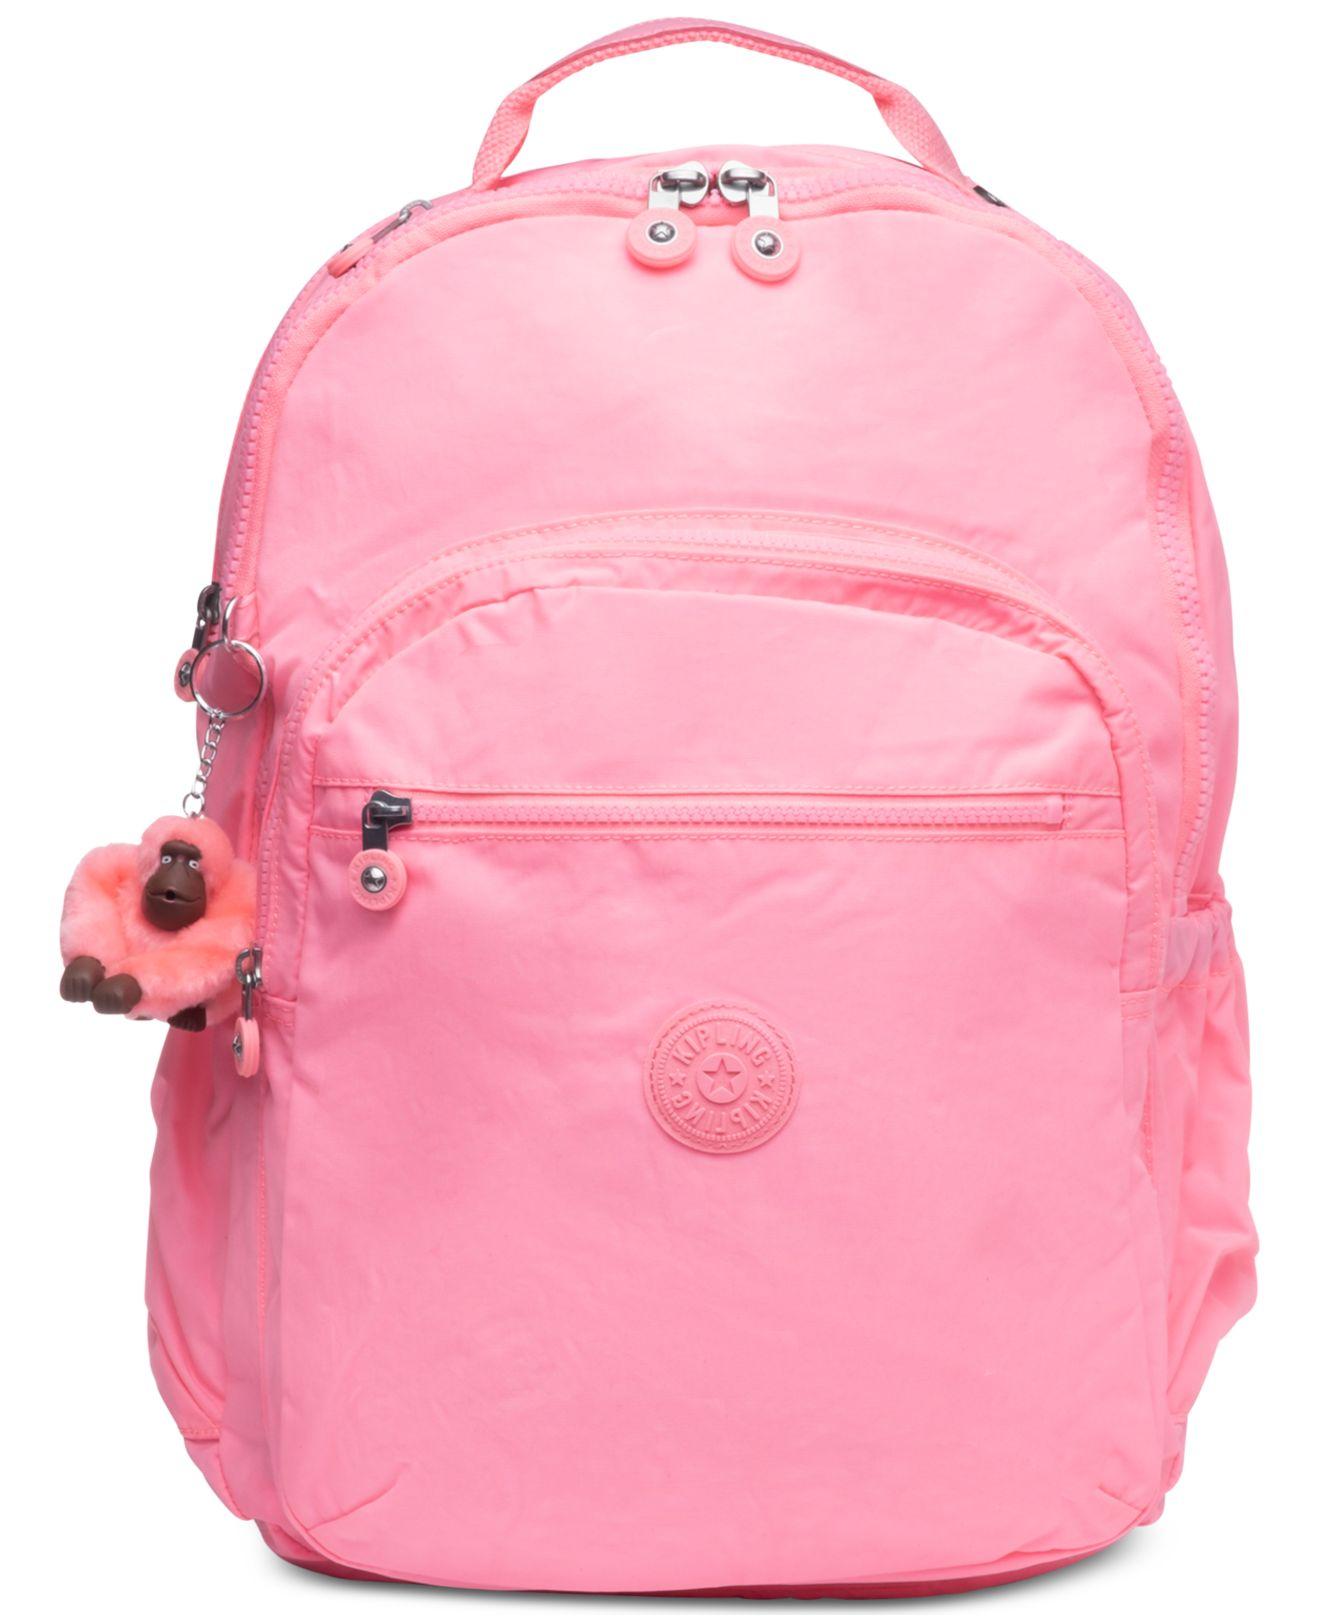 Kipling Seoul Go X-large Backpack in Pink - Save 40% - Lyst